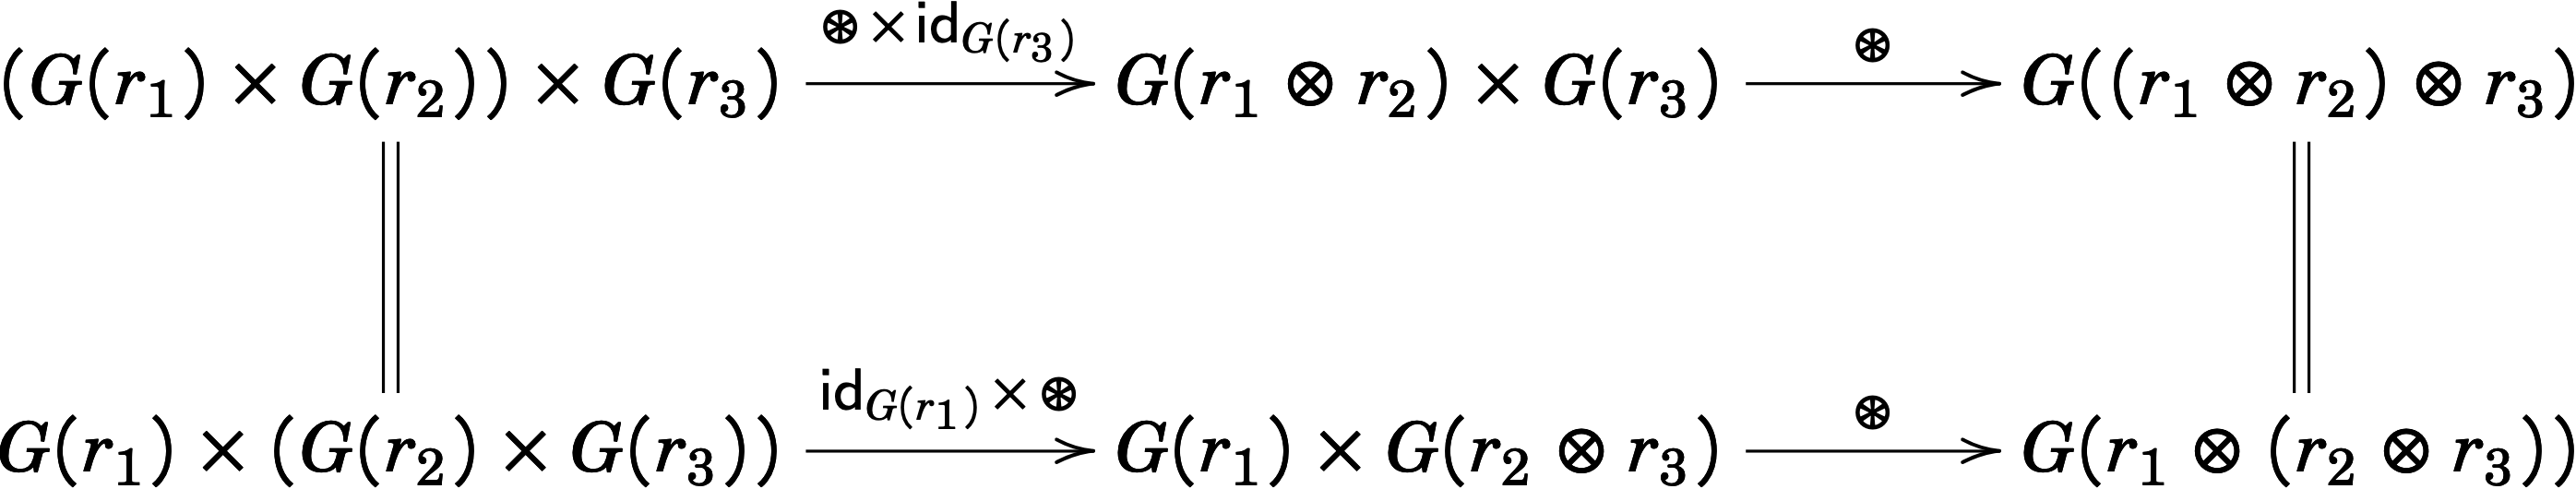 Commutative diagram for the associativity axiom for a graded monoid.